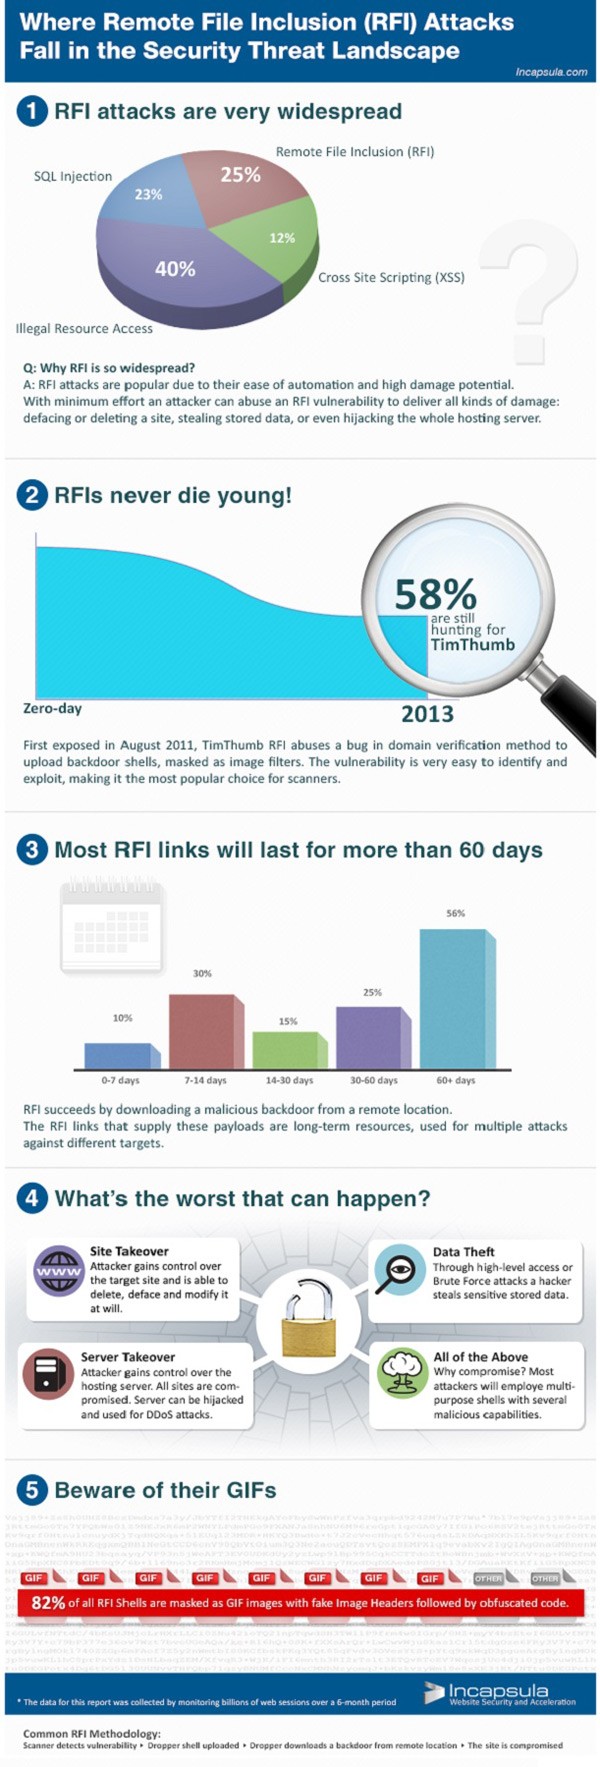 rfi attacks widespread malware infograpic